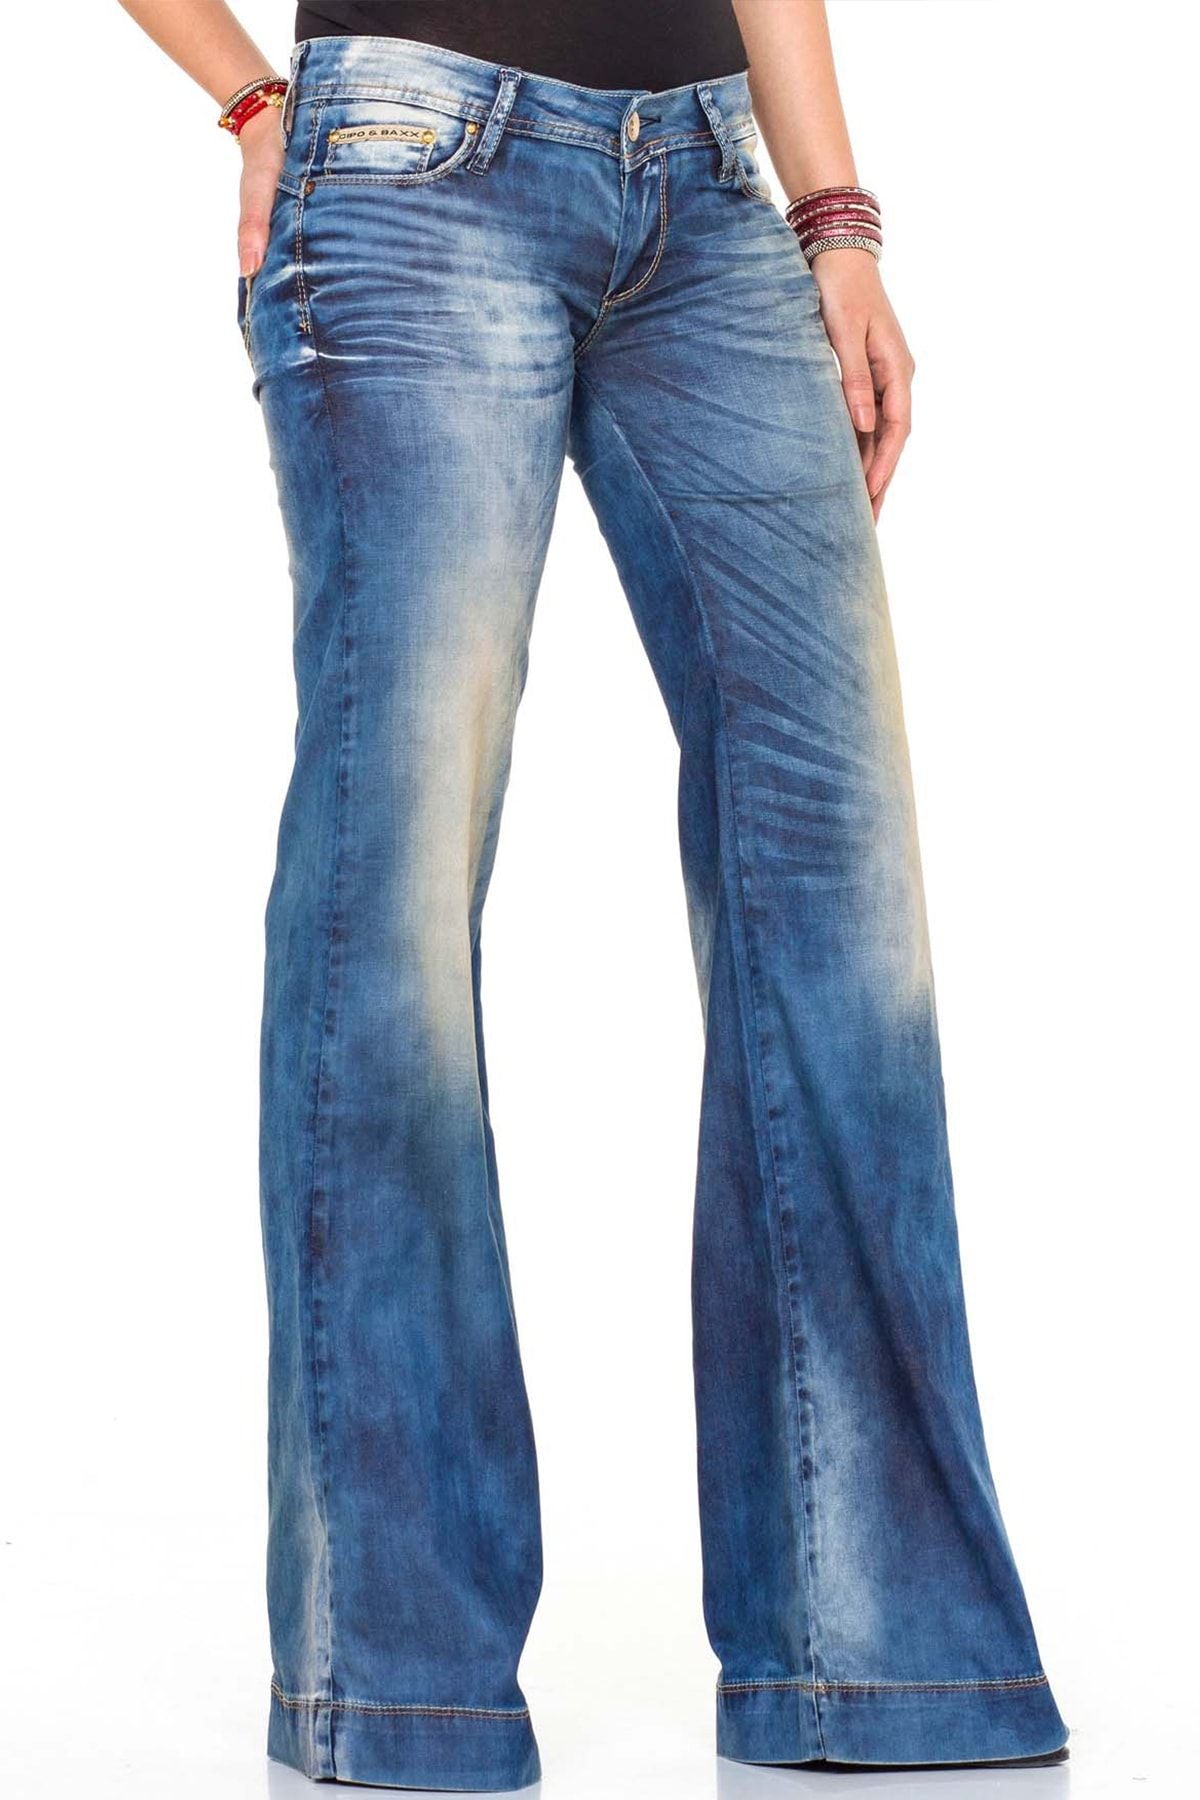 CBW-0424 Standaard Damen jeans